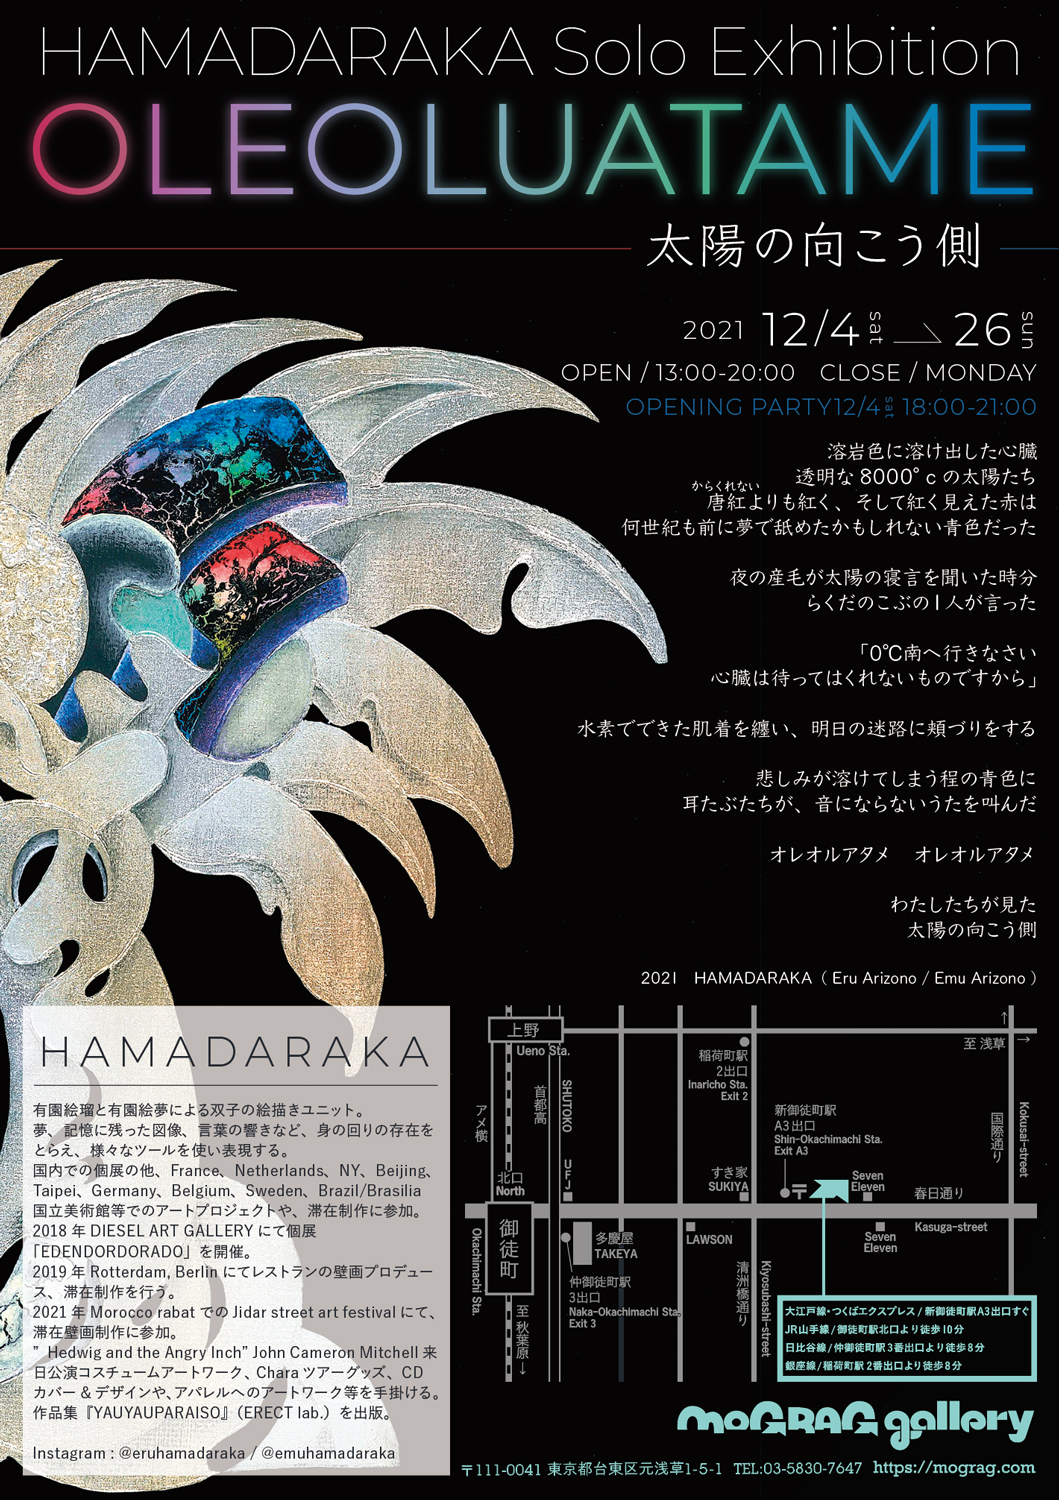 HAMADARAKA Solo Exhibition「OLEOLUATAME -太陽の向こう側-」